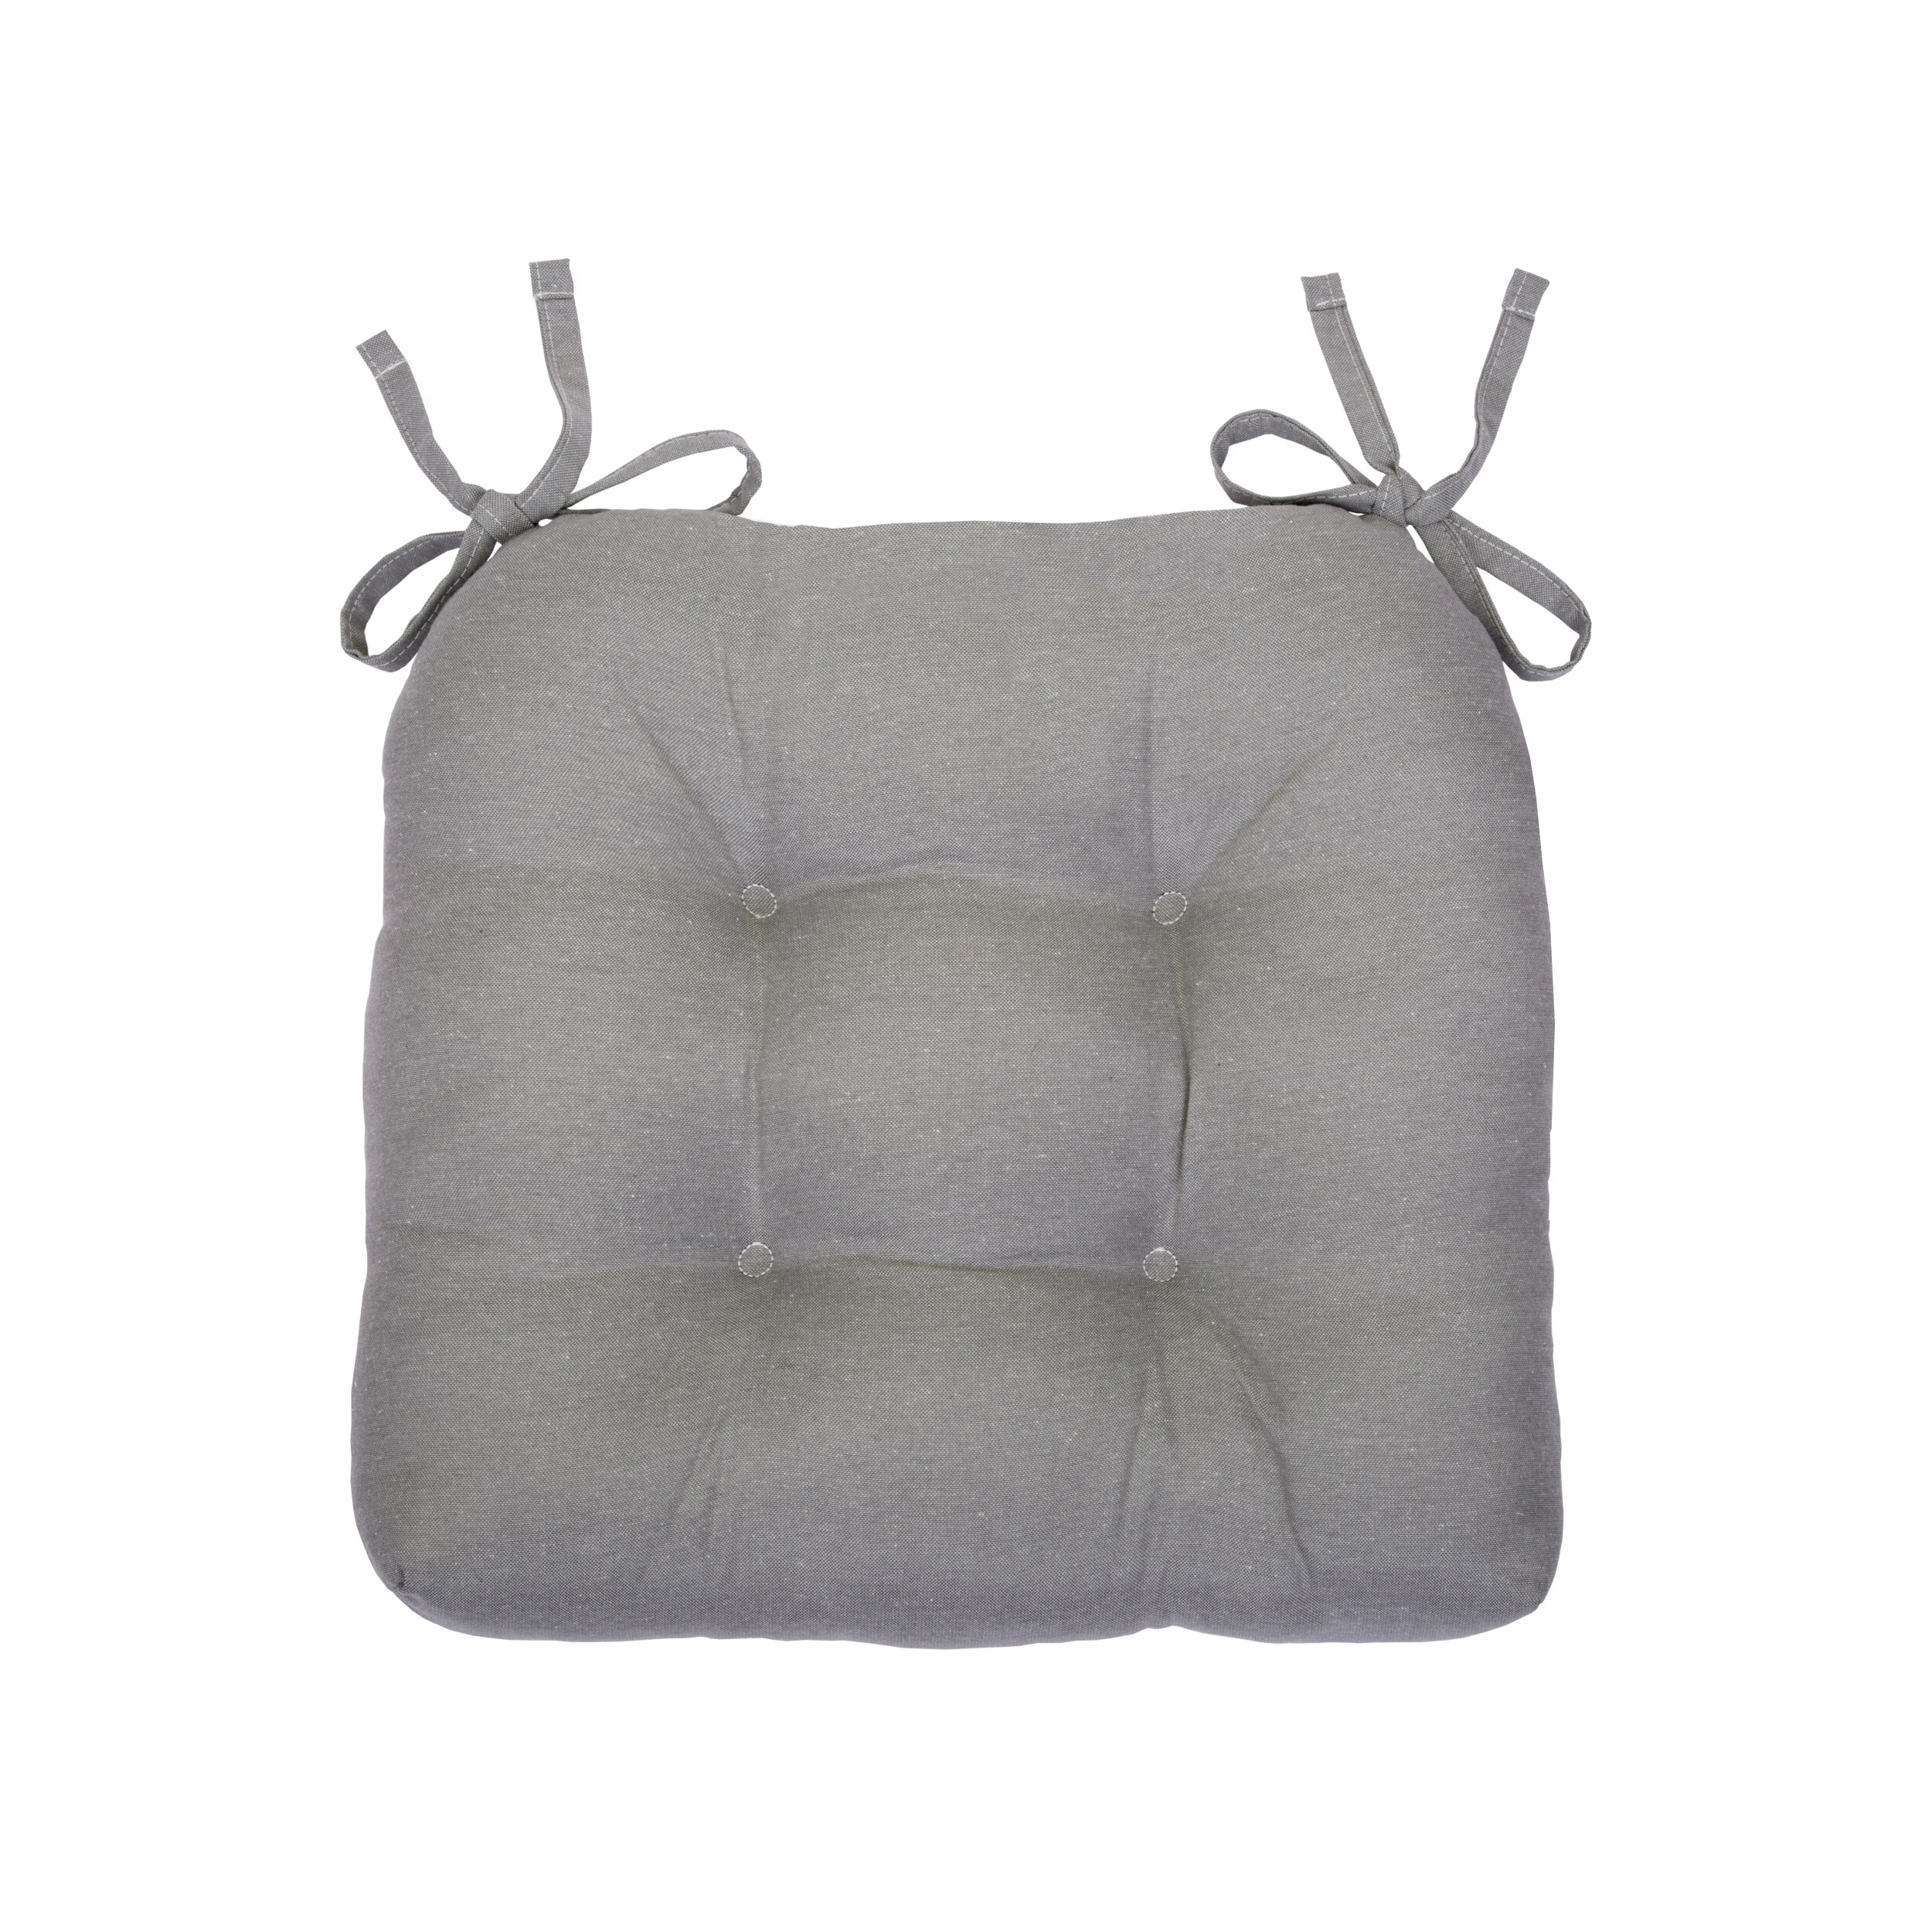 Achim Buffalo Check Tufted Chair Seat Cushions - Set of 2 - Burgundy Black/White